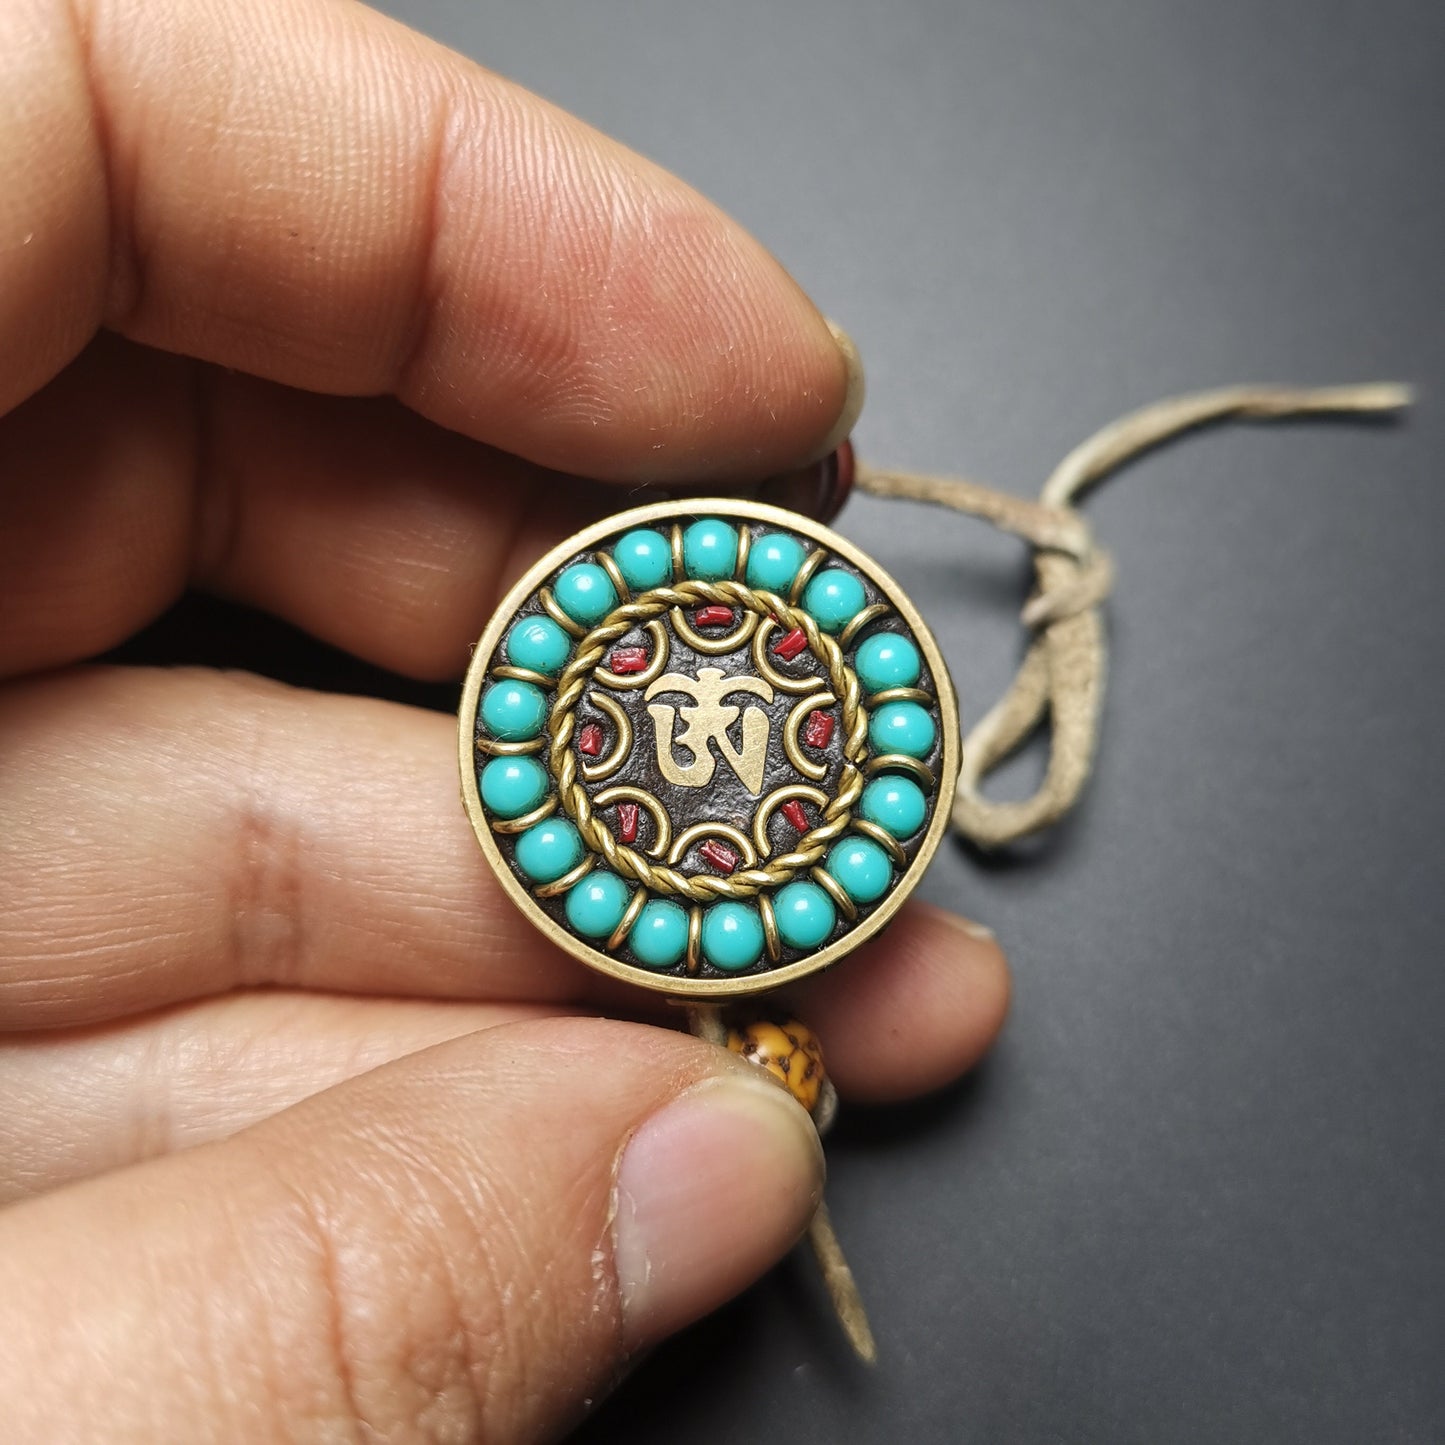 Gandhanra Handmade Tibetan Buddhism Amulet Pendant, Turquoise Beads Pendant, Inlaid With OM Symbol, Spiritual Gift.40 Years Old